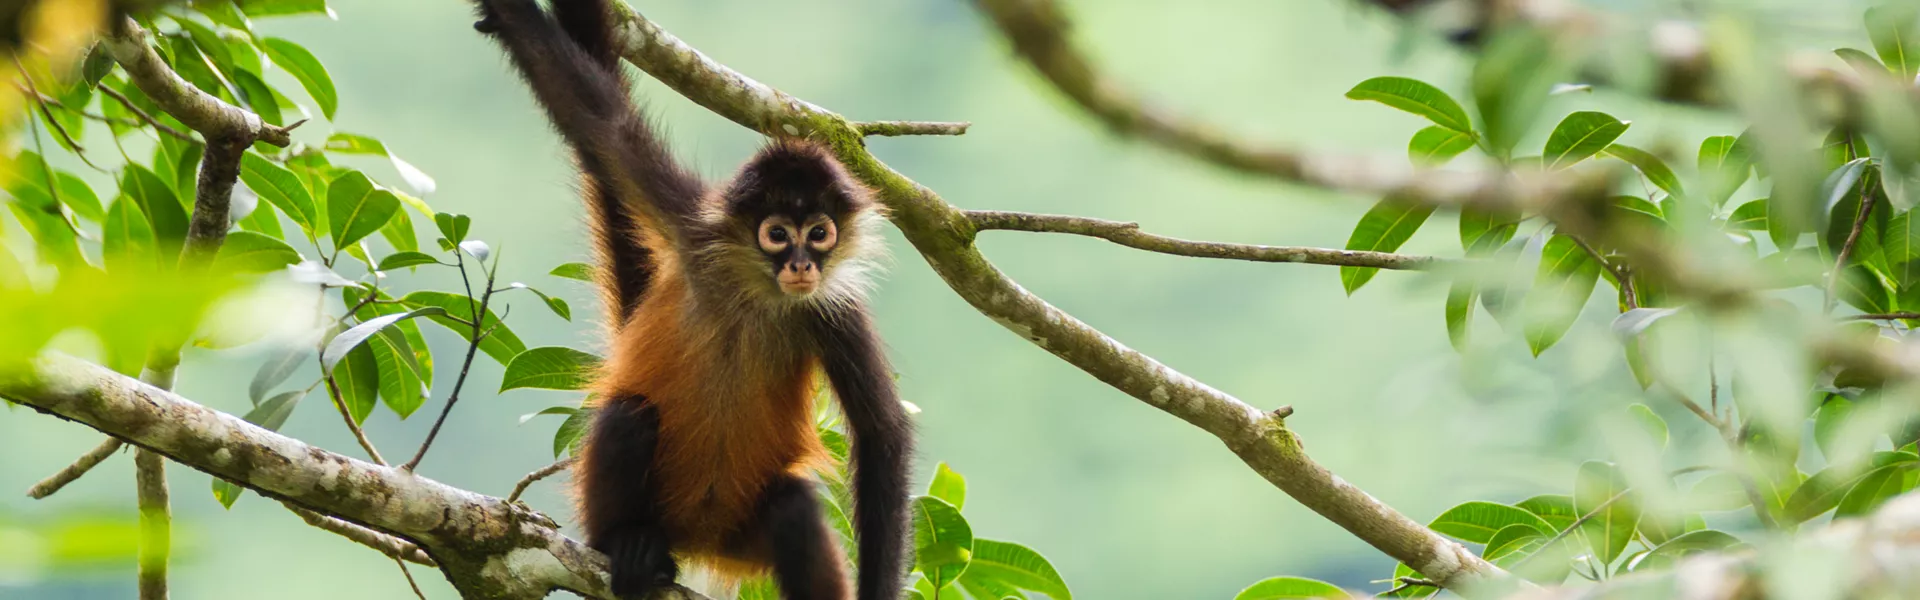 Monkey on a tree, Costa Rica